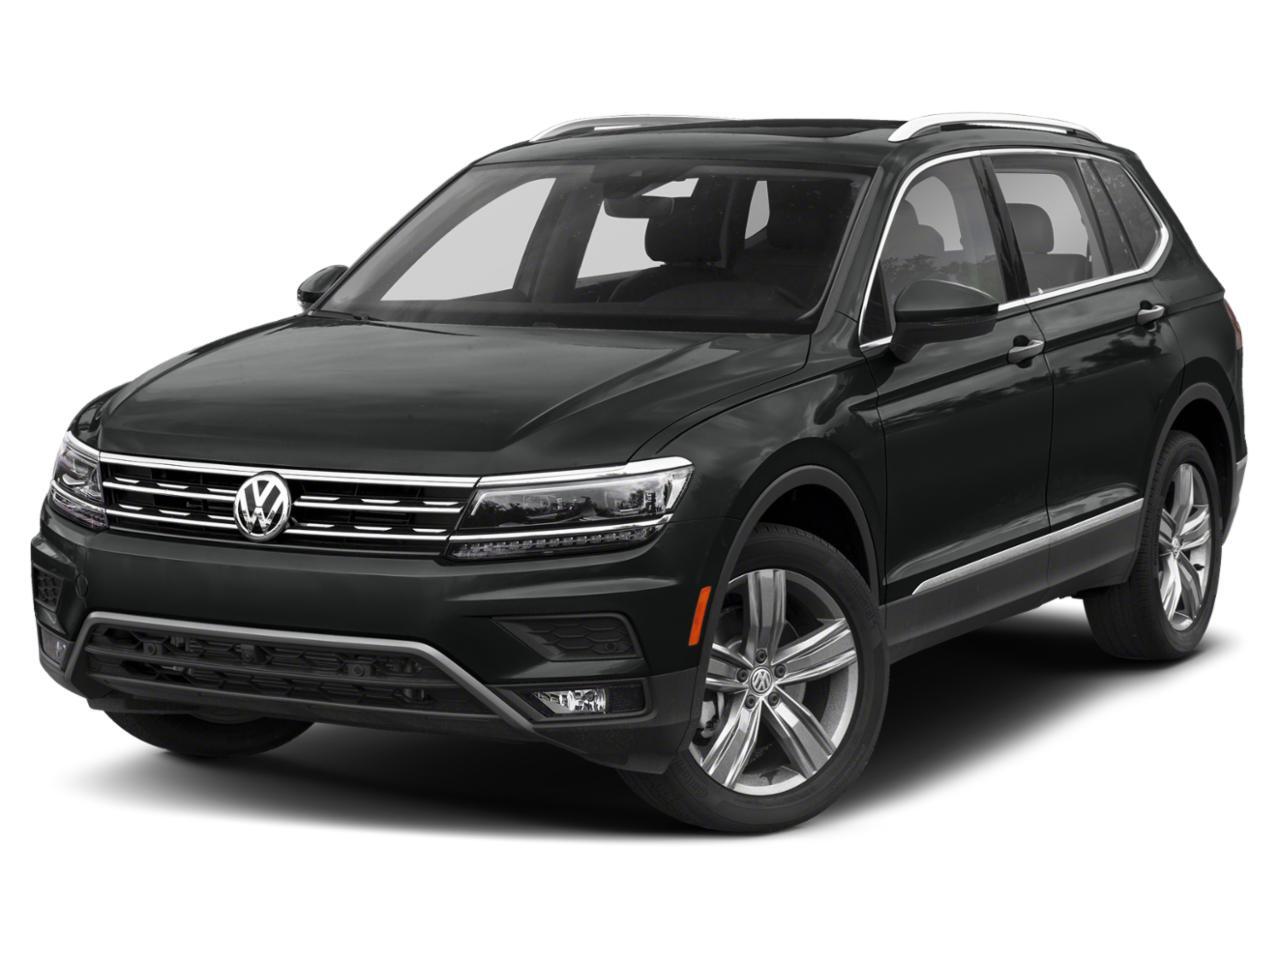 2018 Volkswagen Tiguan 4Motion | R-Line Package | Leather | Navi